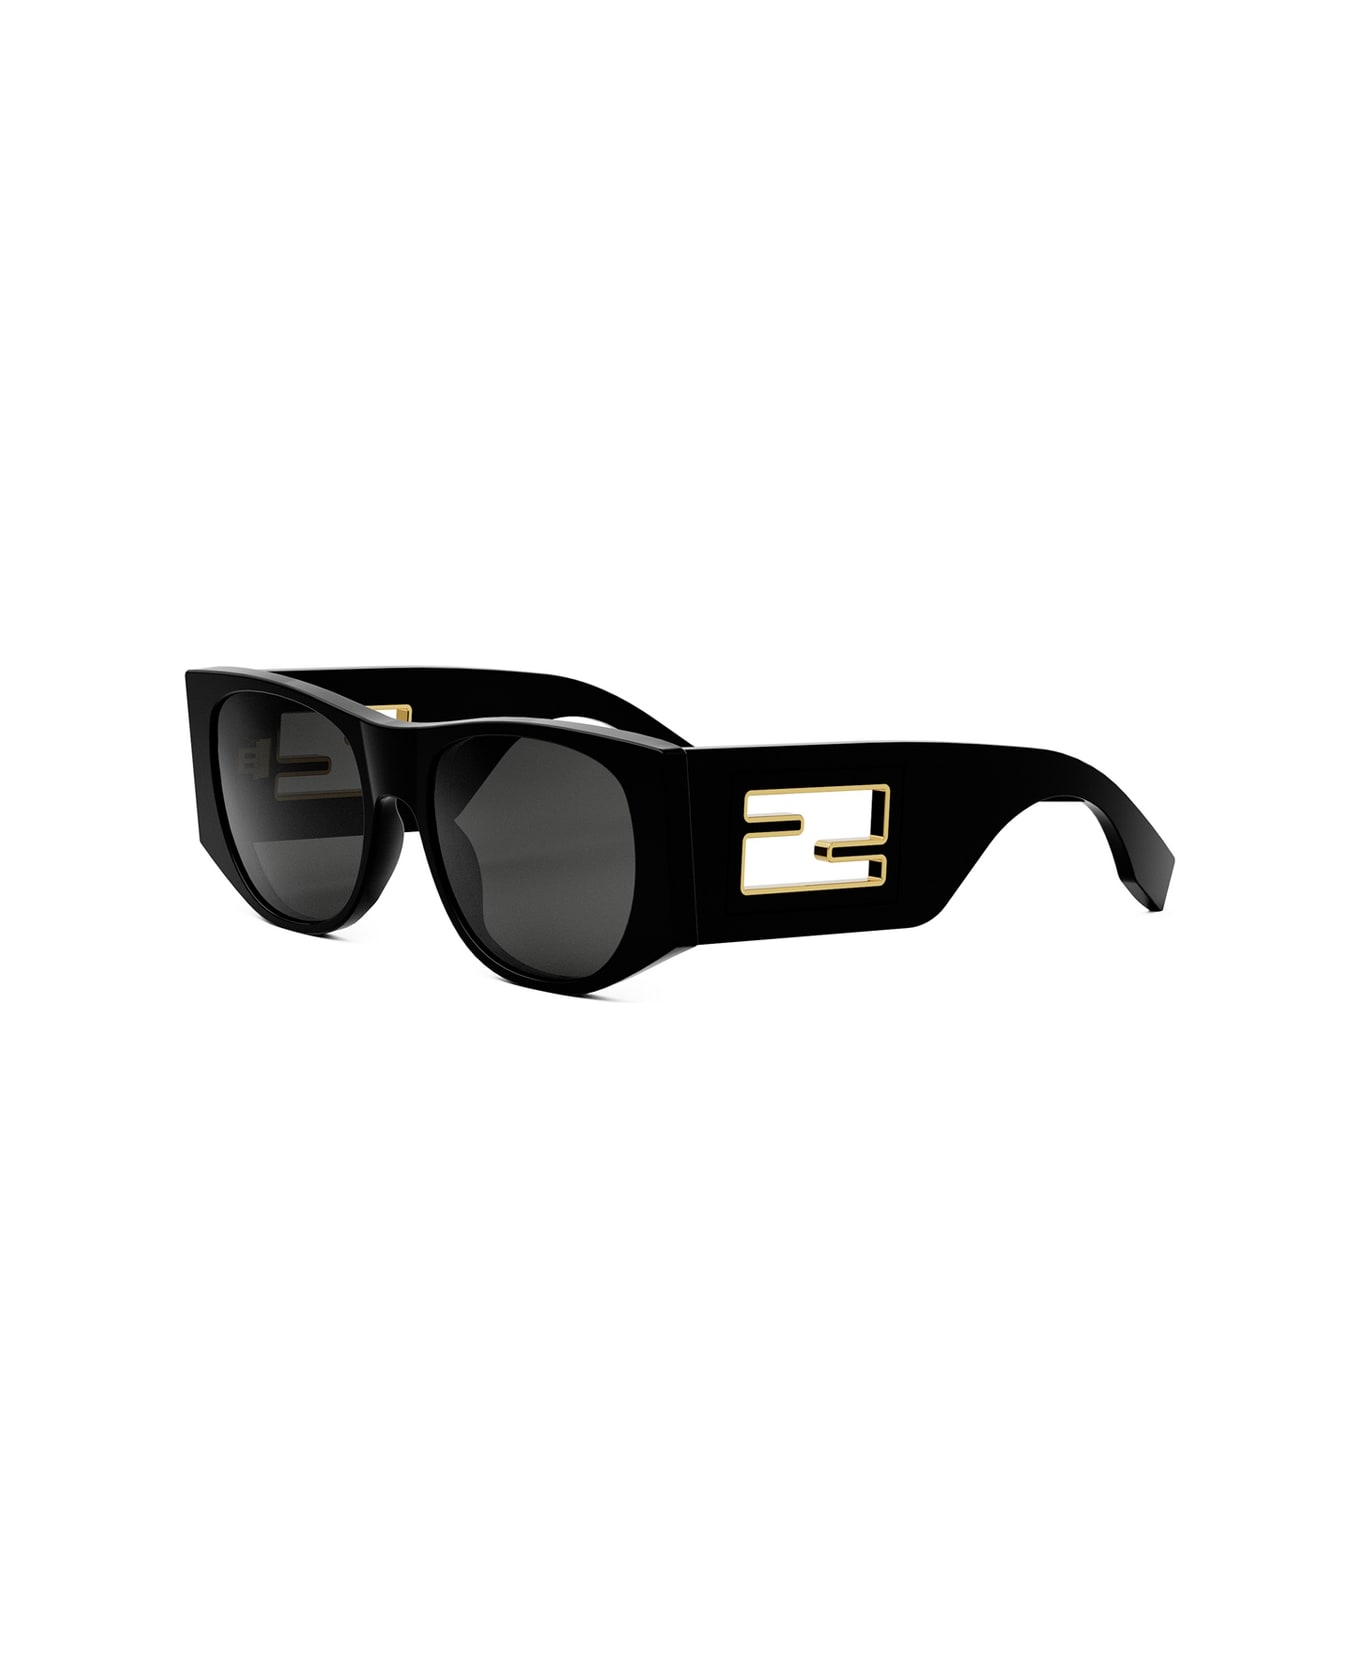 Fendi Eyewear Fe40109i 01a Sunglasses - Nero サングラス